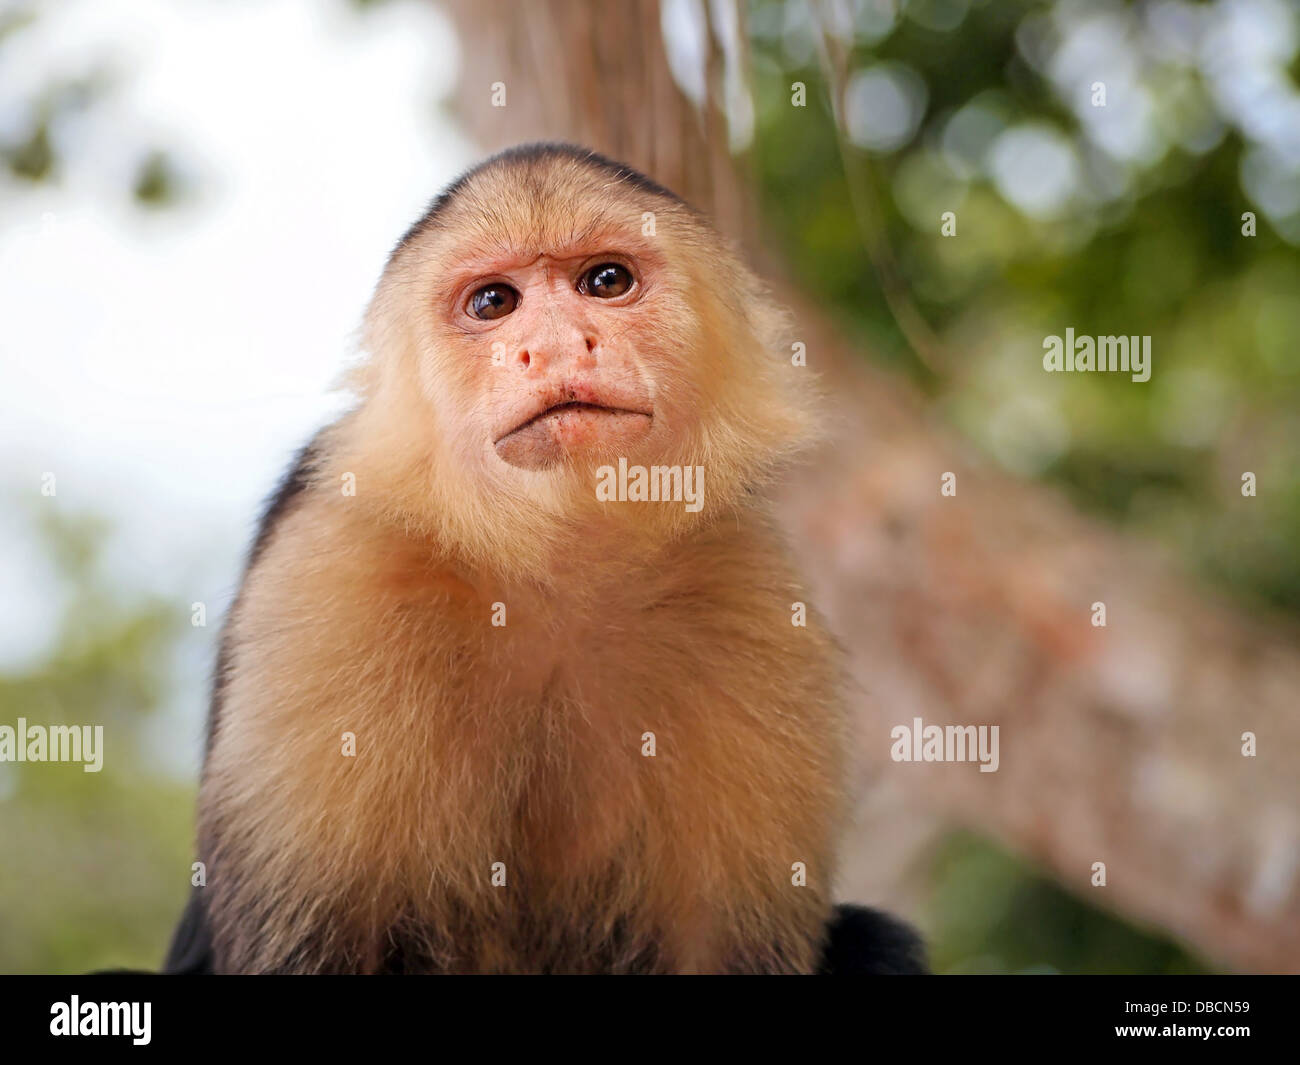 Head of White-Faced Capuchin monkey, national park of Cahuita, Caribbean, Costa Rica Stock Photo